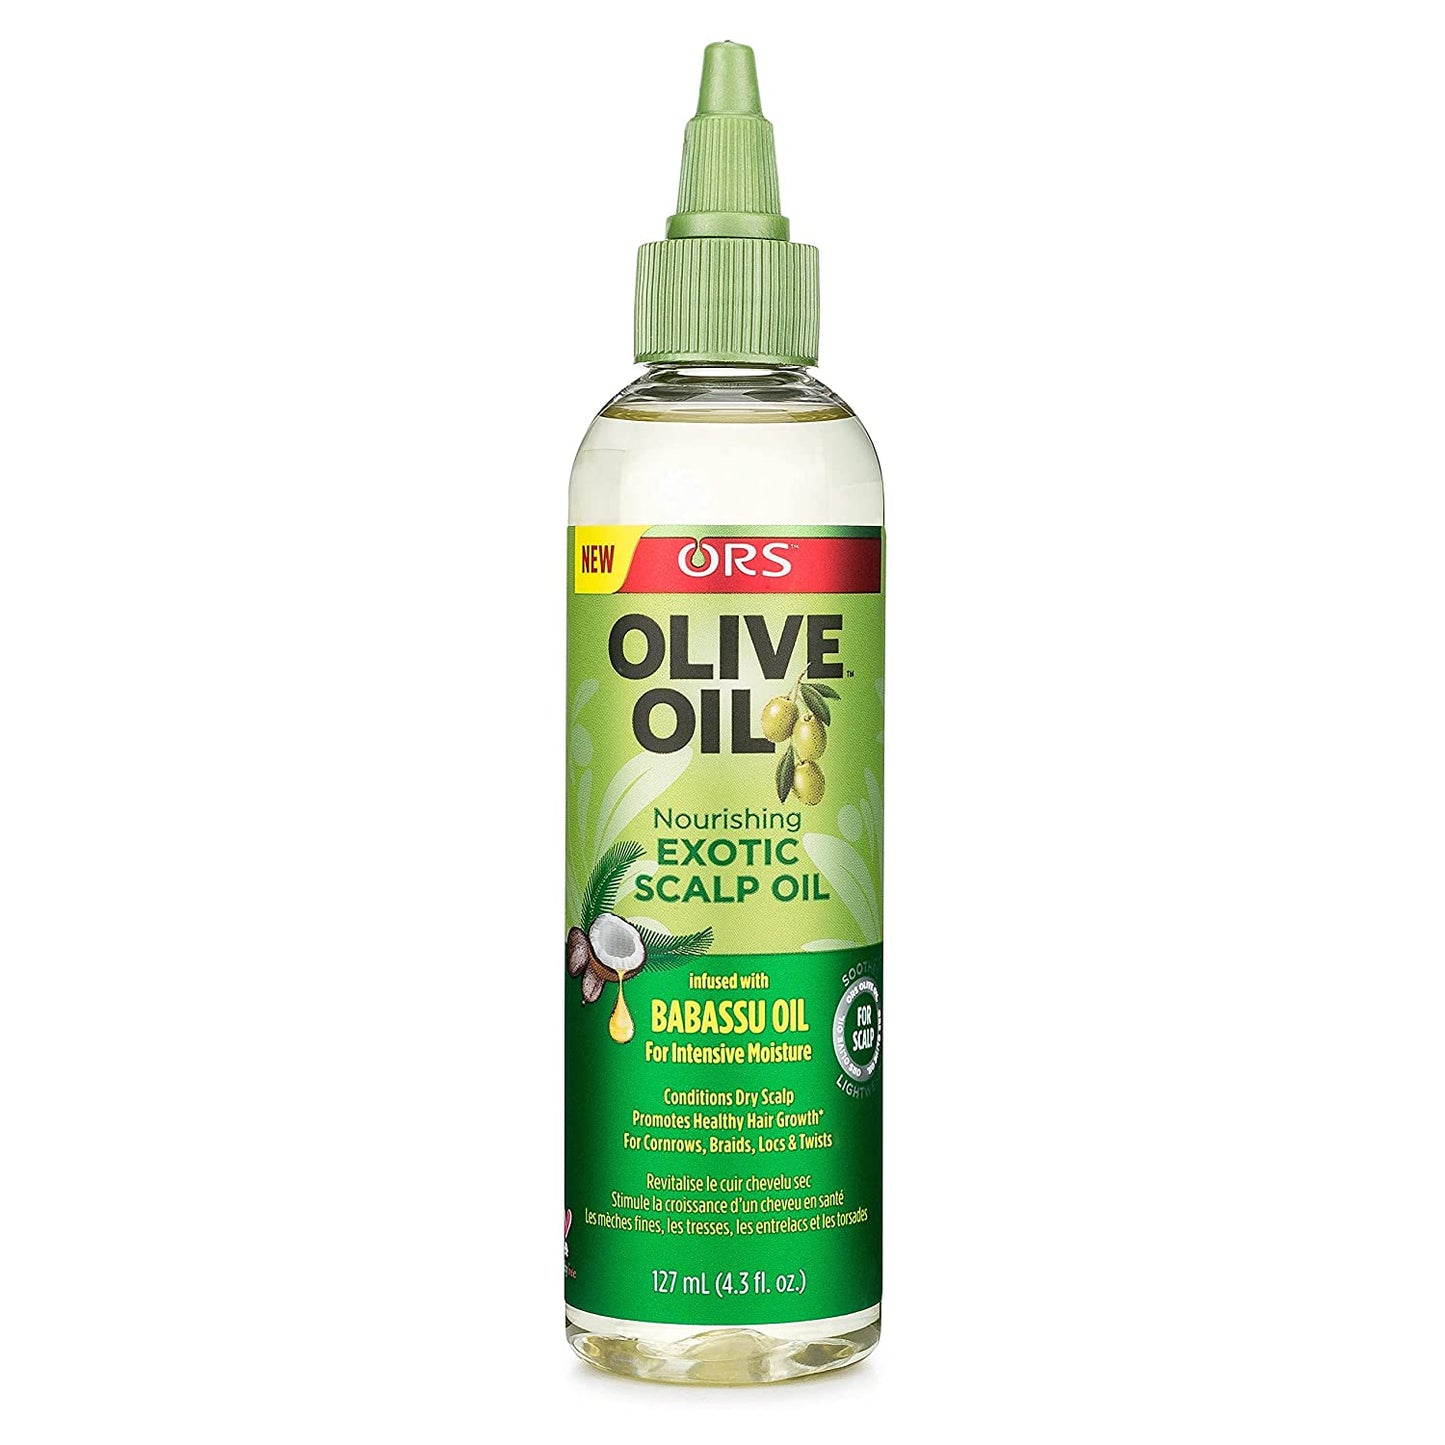 ORS: Olive Oil Nourishing Exotic Scalp Oil